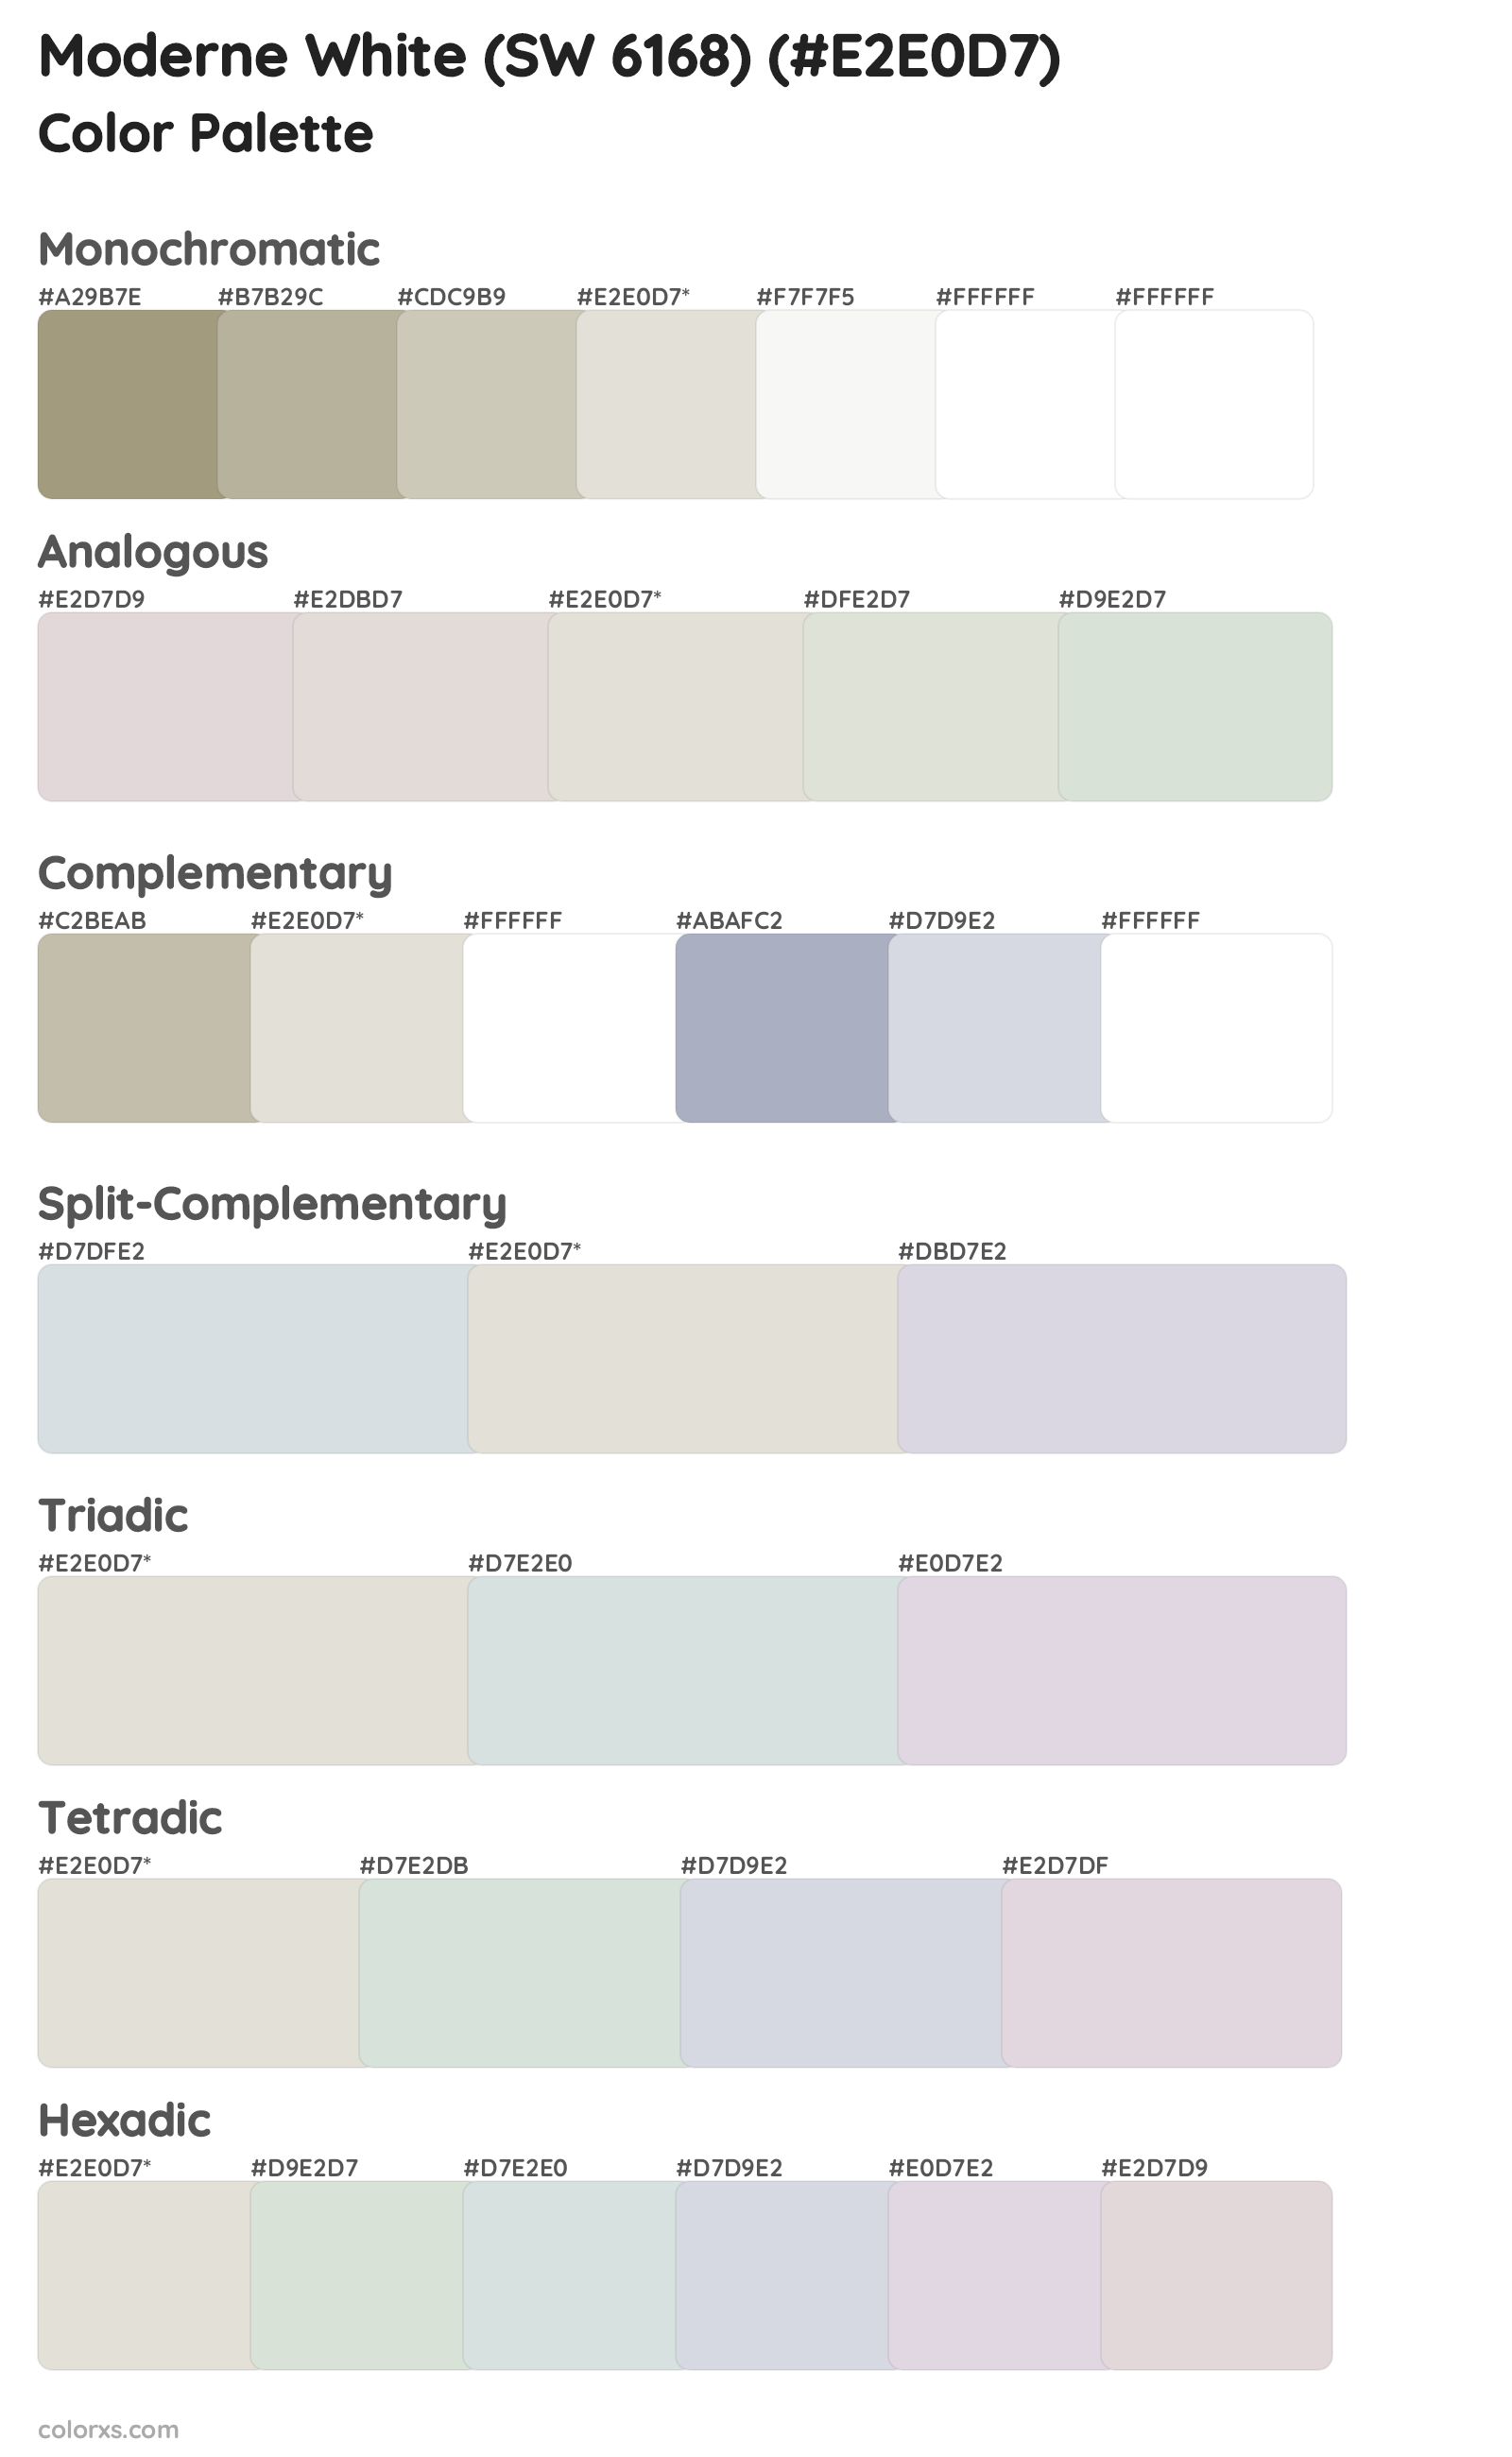 Moderne White (SW 6168) Color Scheme Palettes